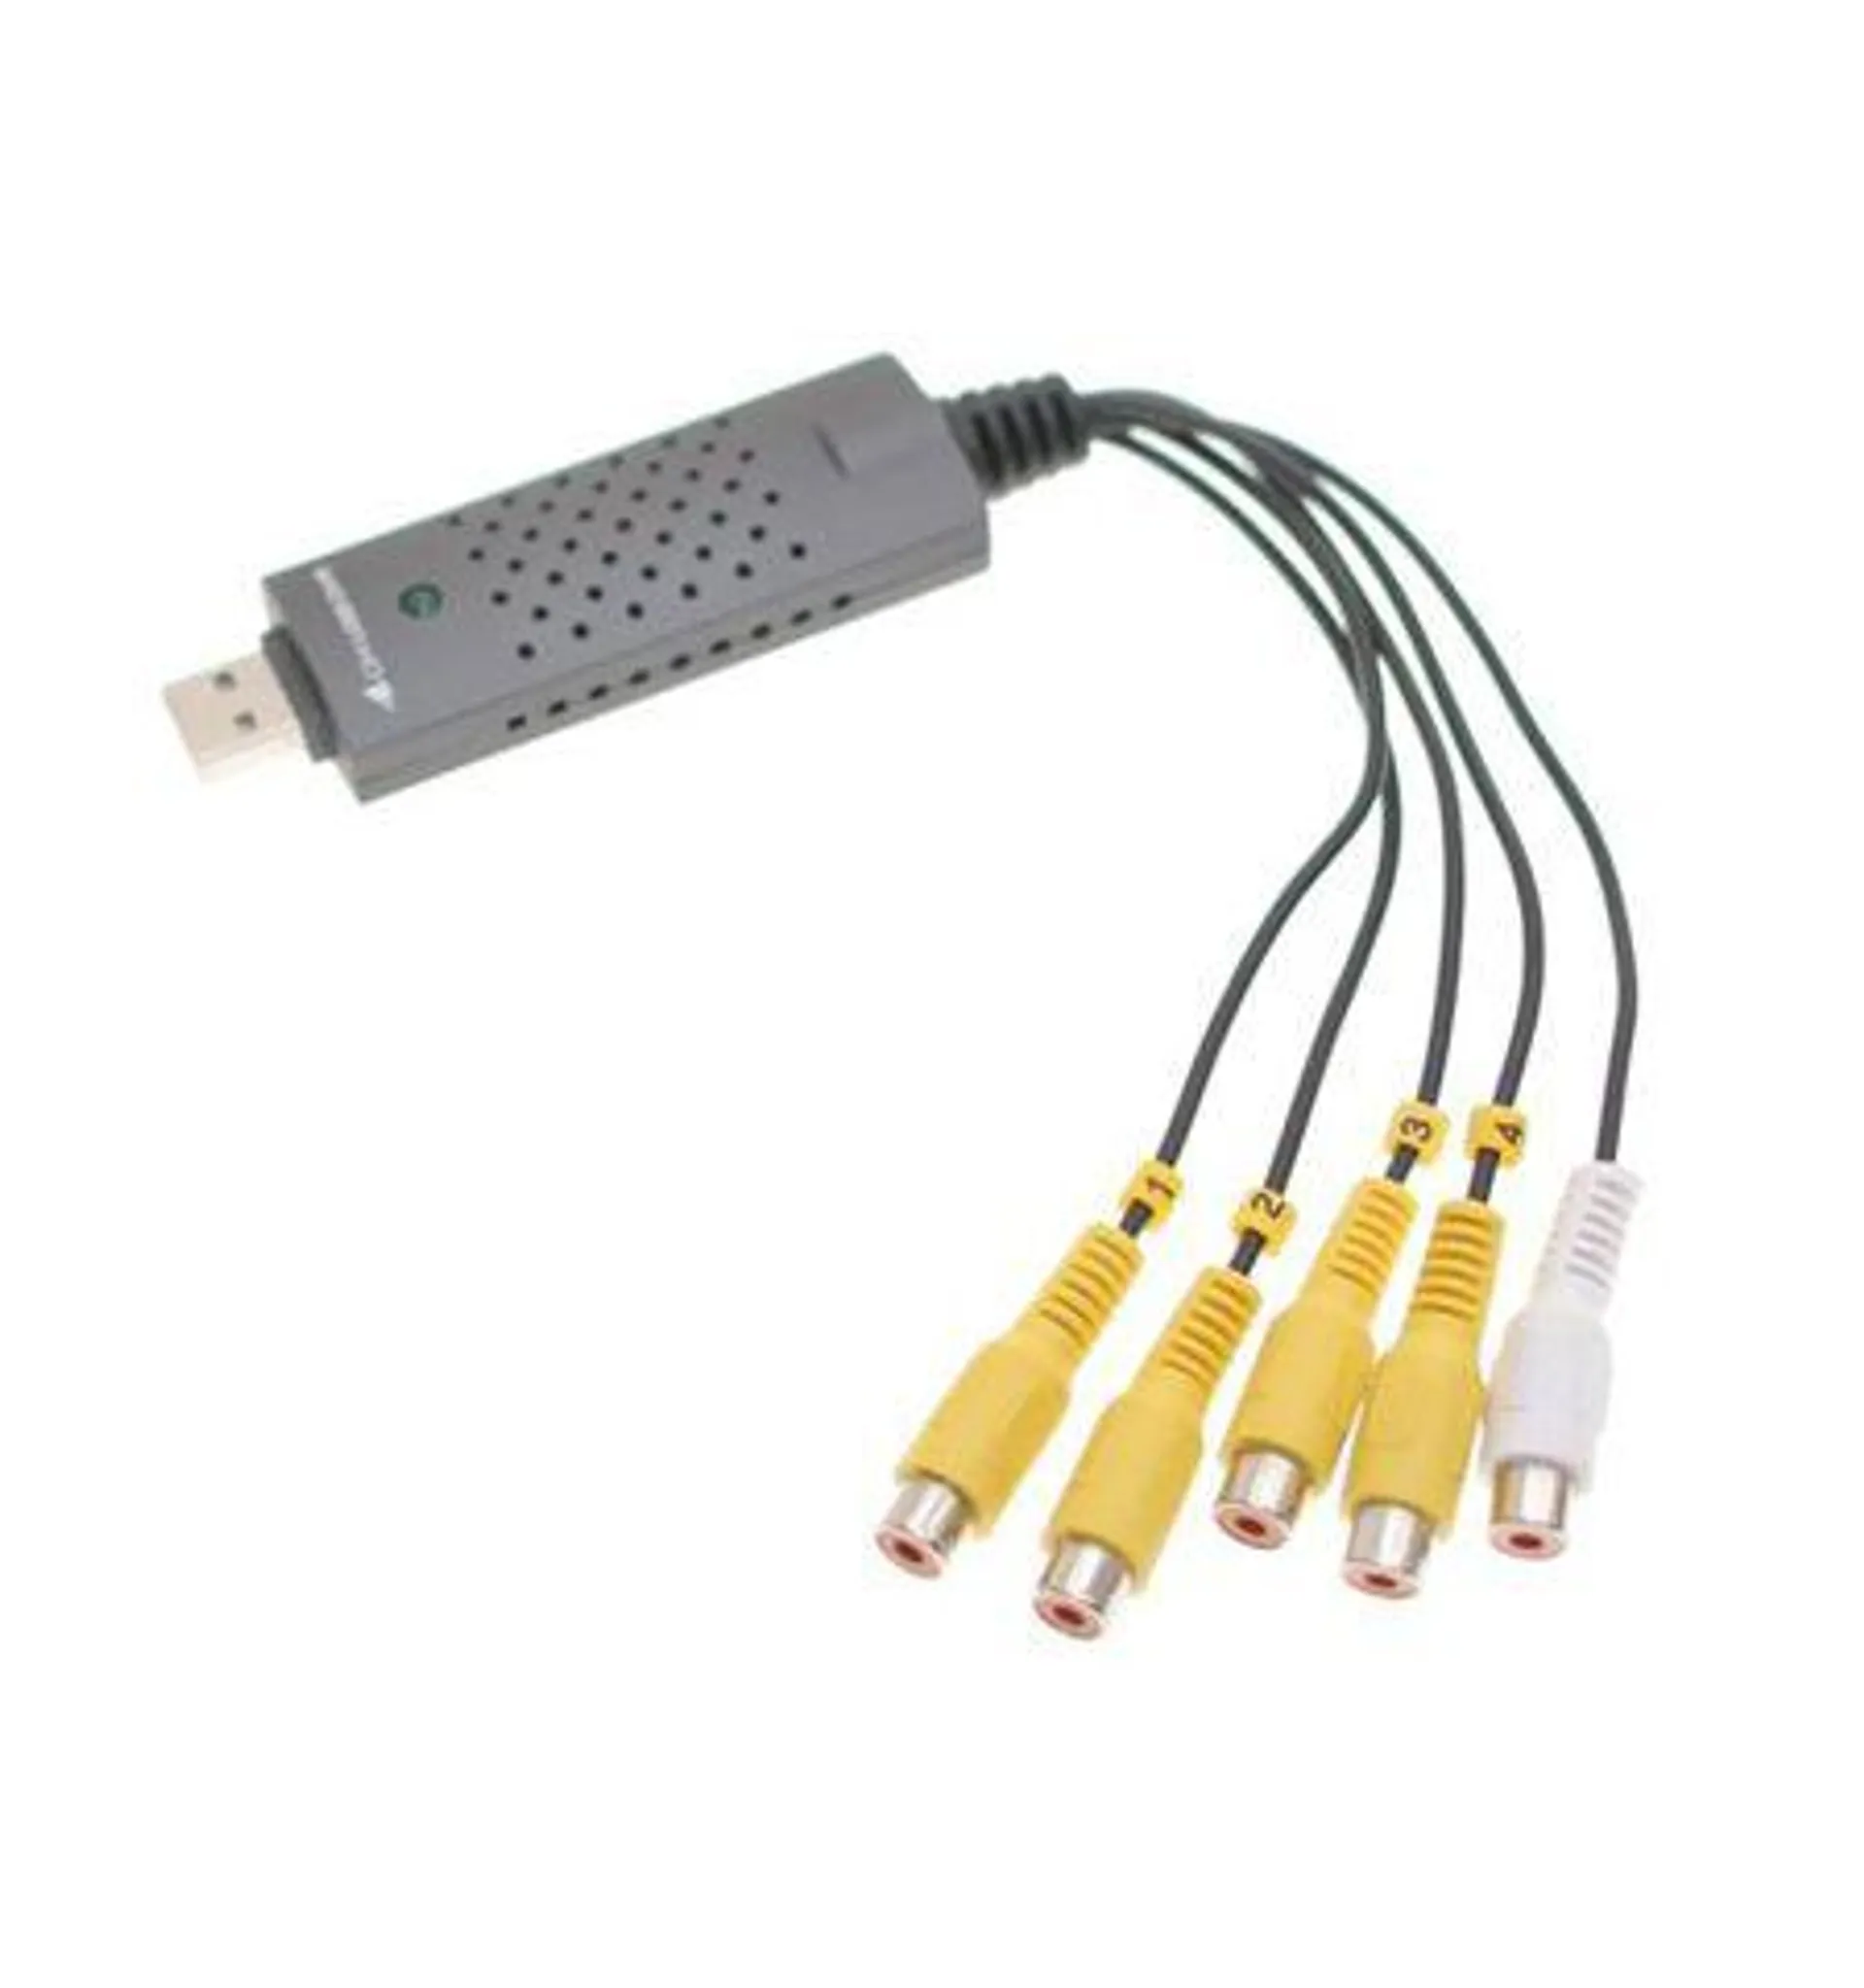 4-Channel USB DVR Adapter